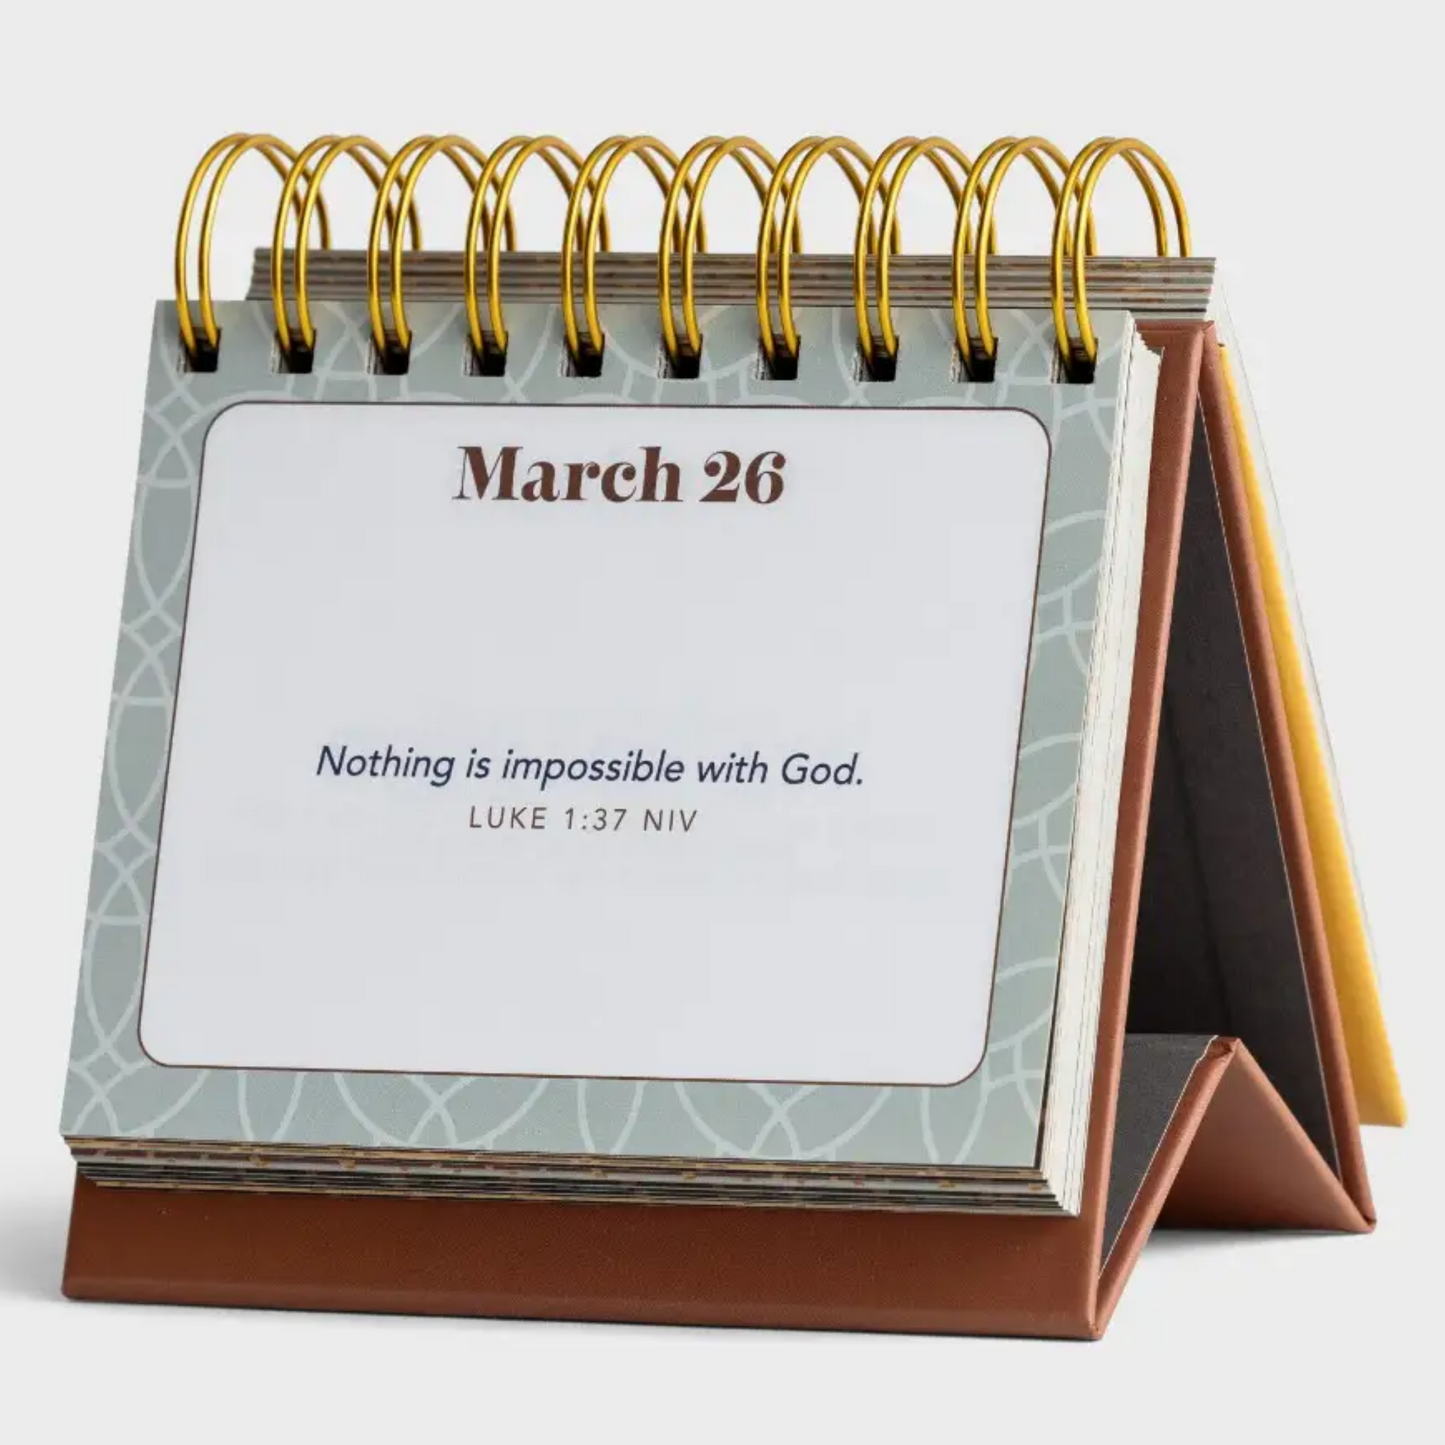 Perpetual Calendar - Joy for Today (U0322)